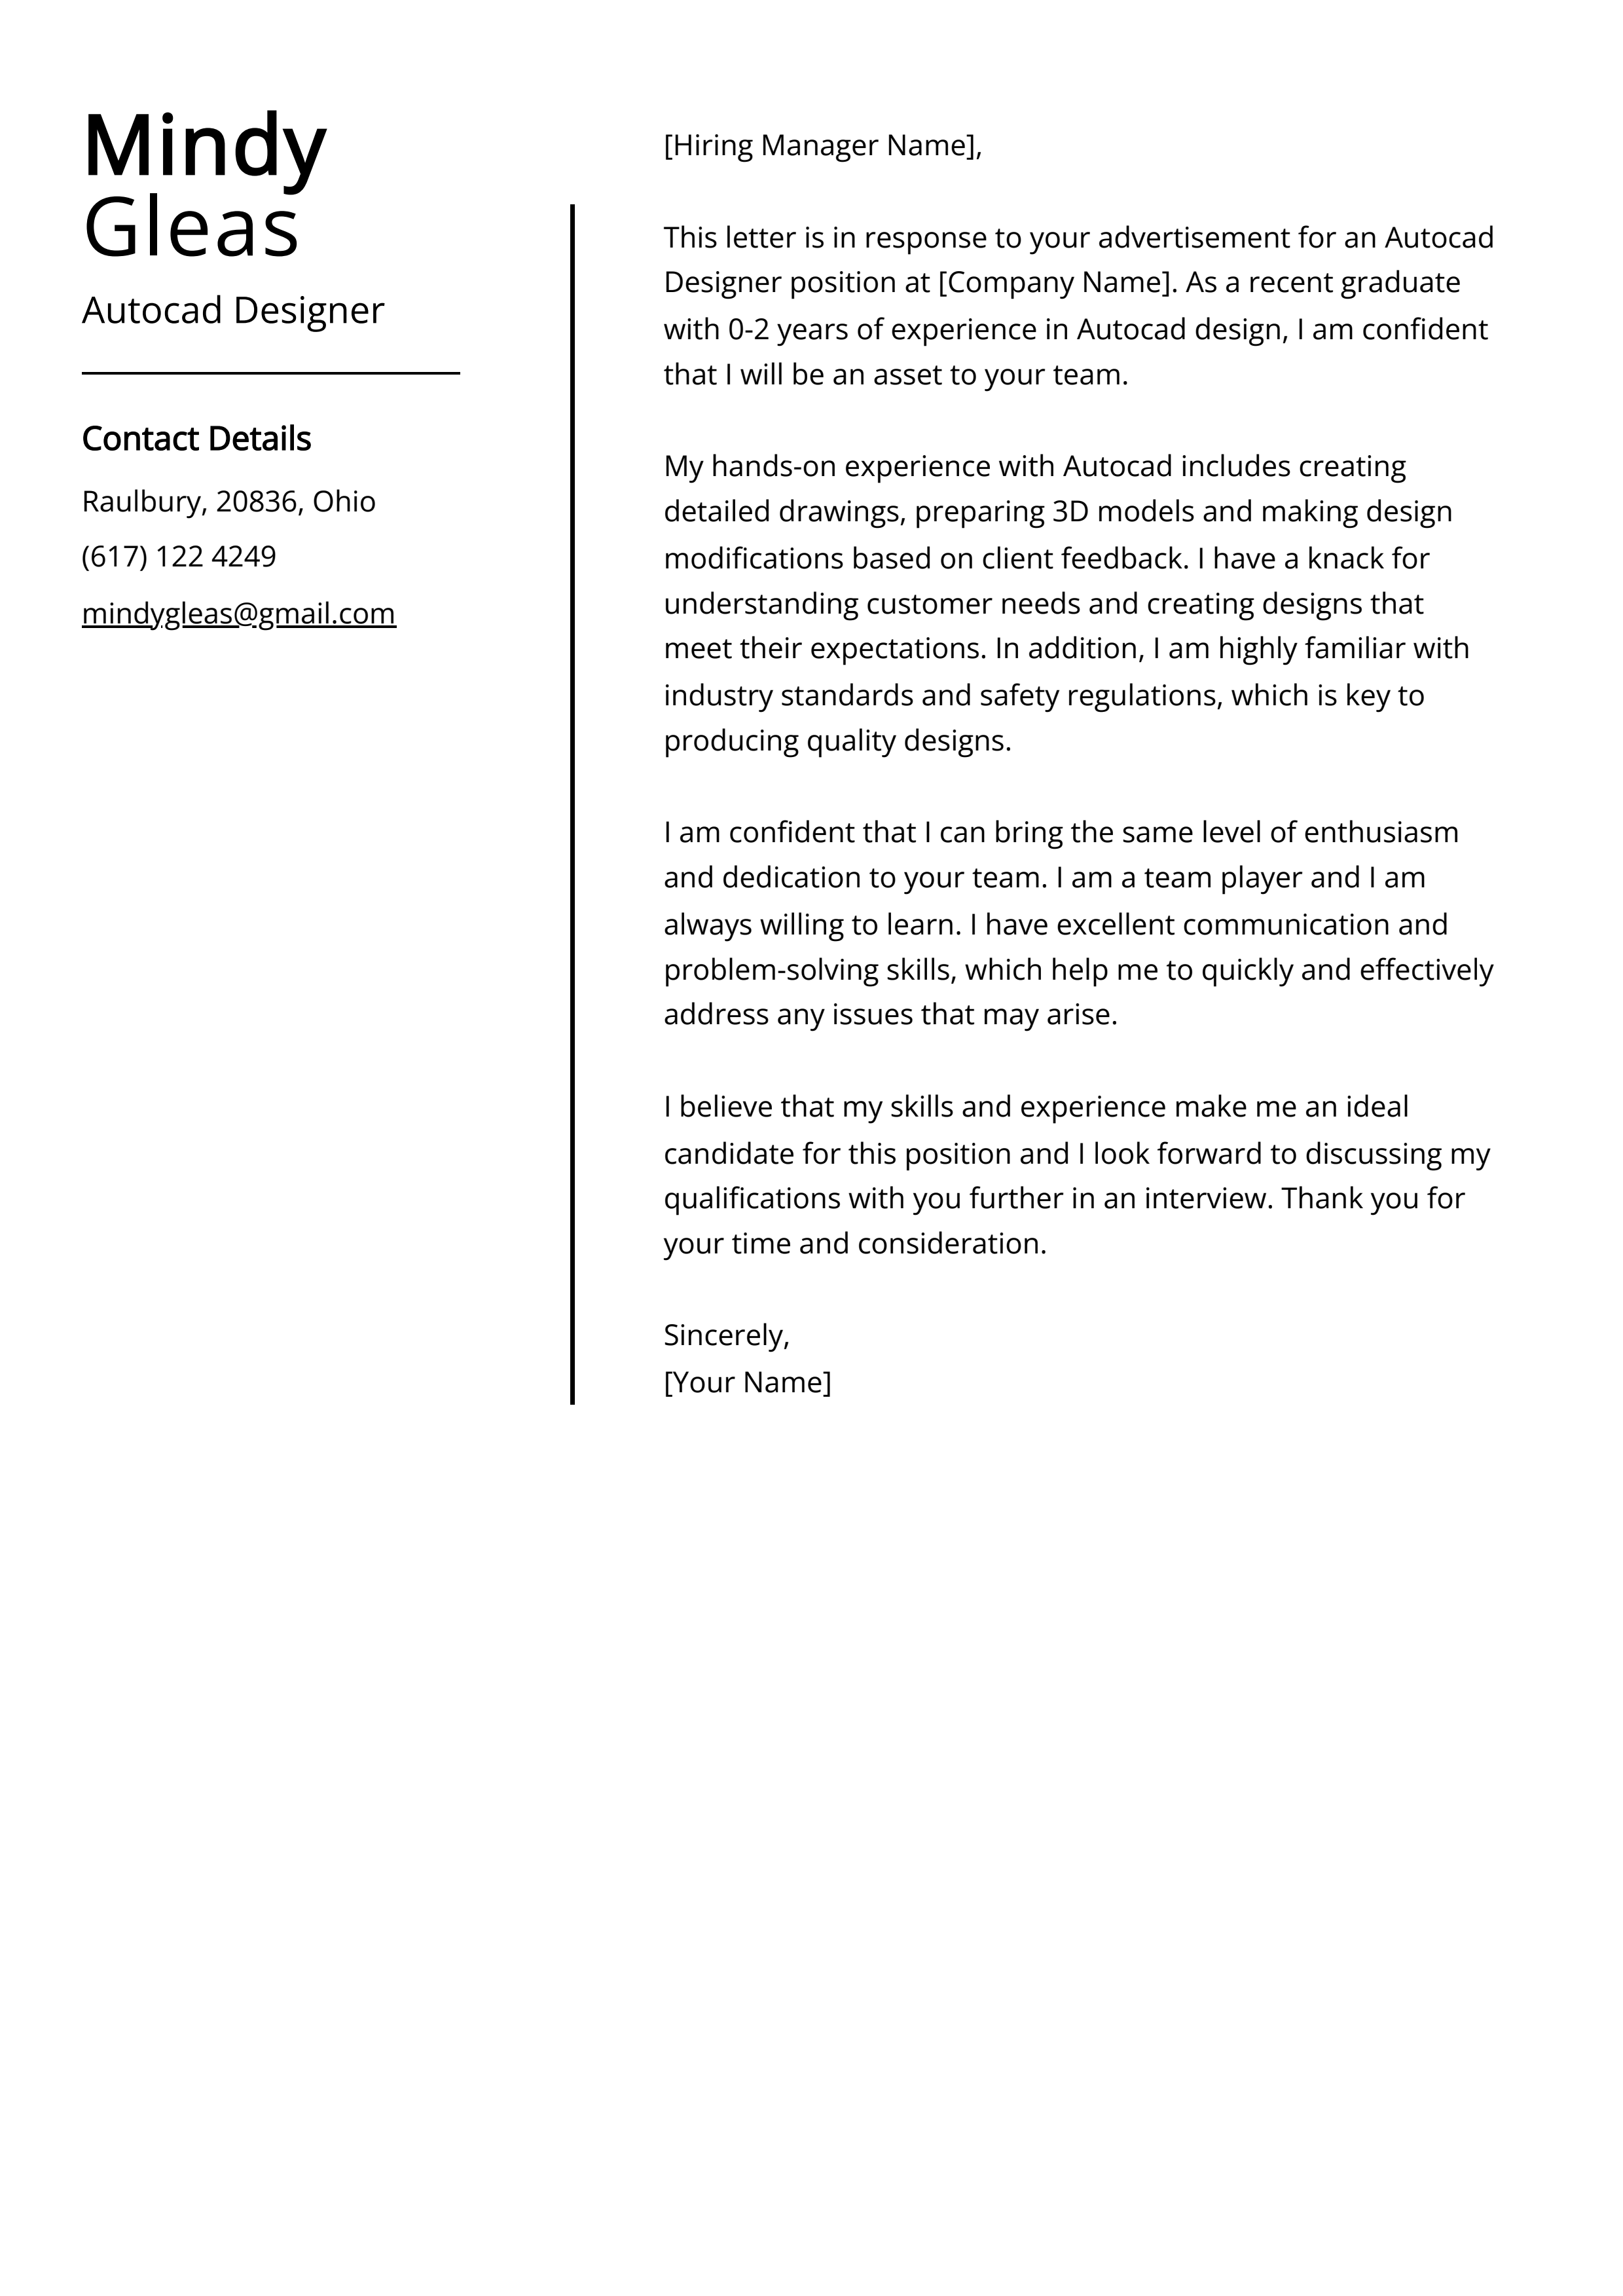 Autocad Designer Cover Letter Example